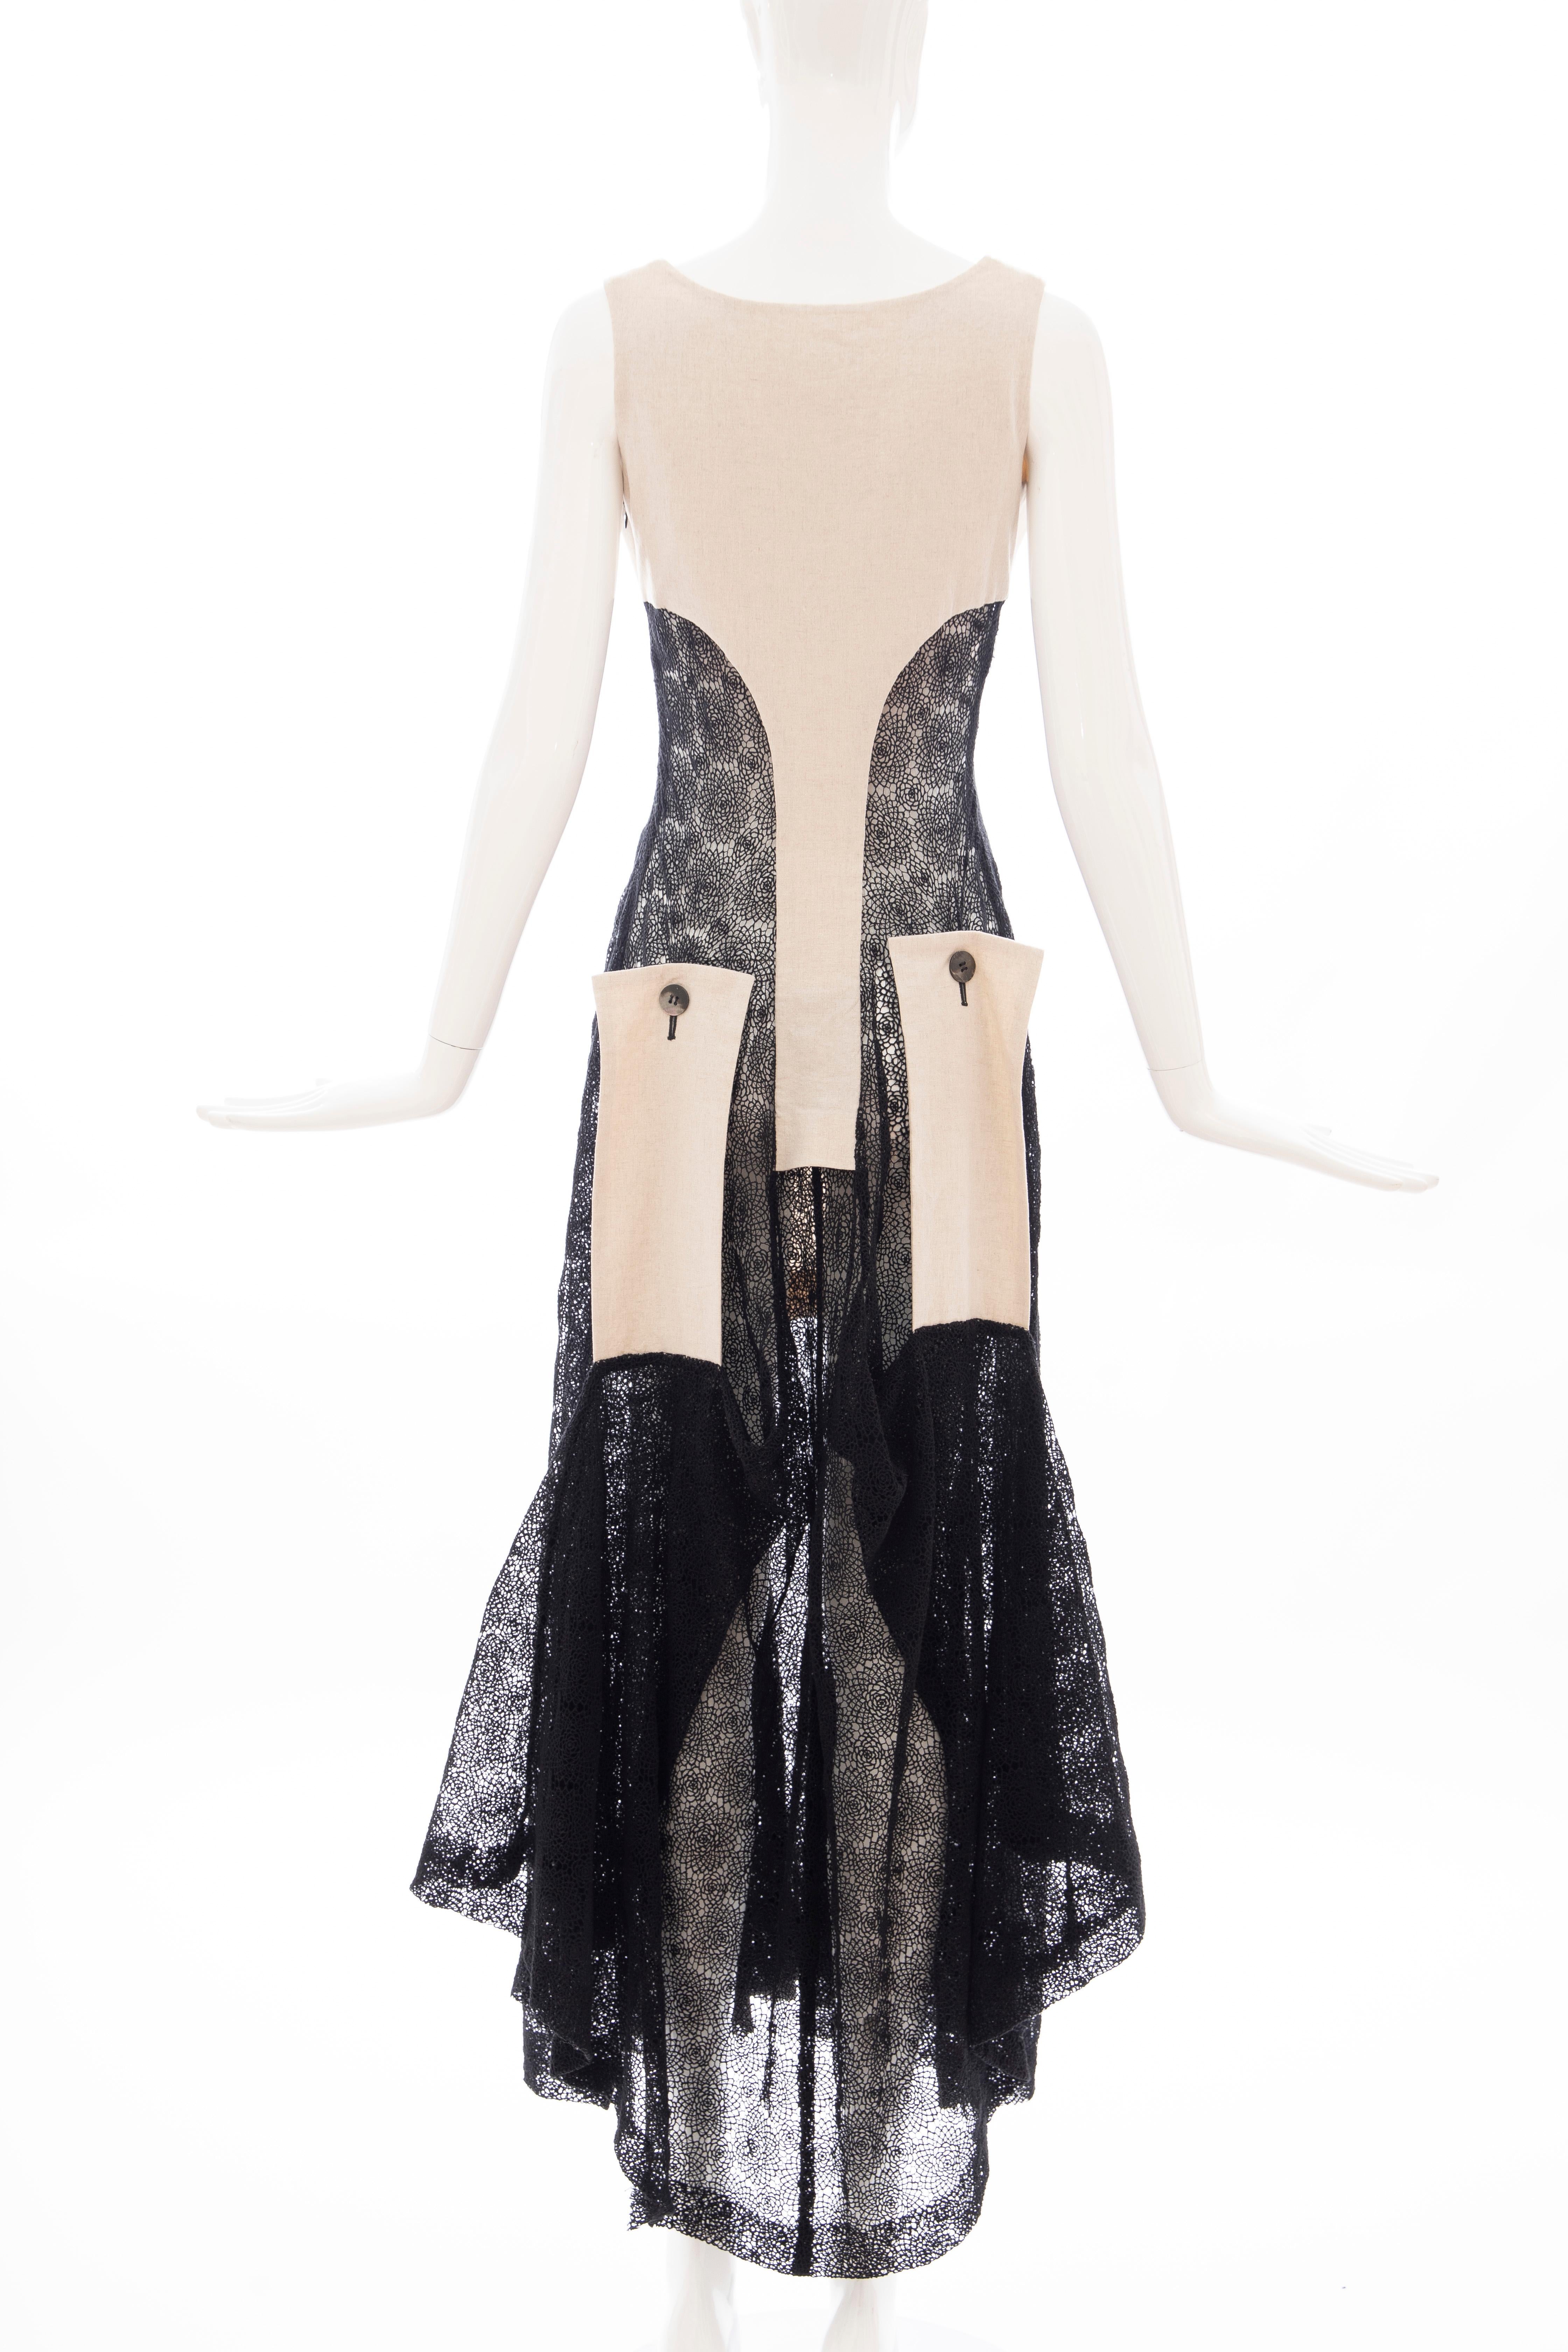 Yohji Yamamoto Runway Black Cotton Lace & Natural Linen Dress, Spring 2005 6